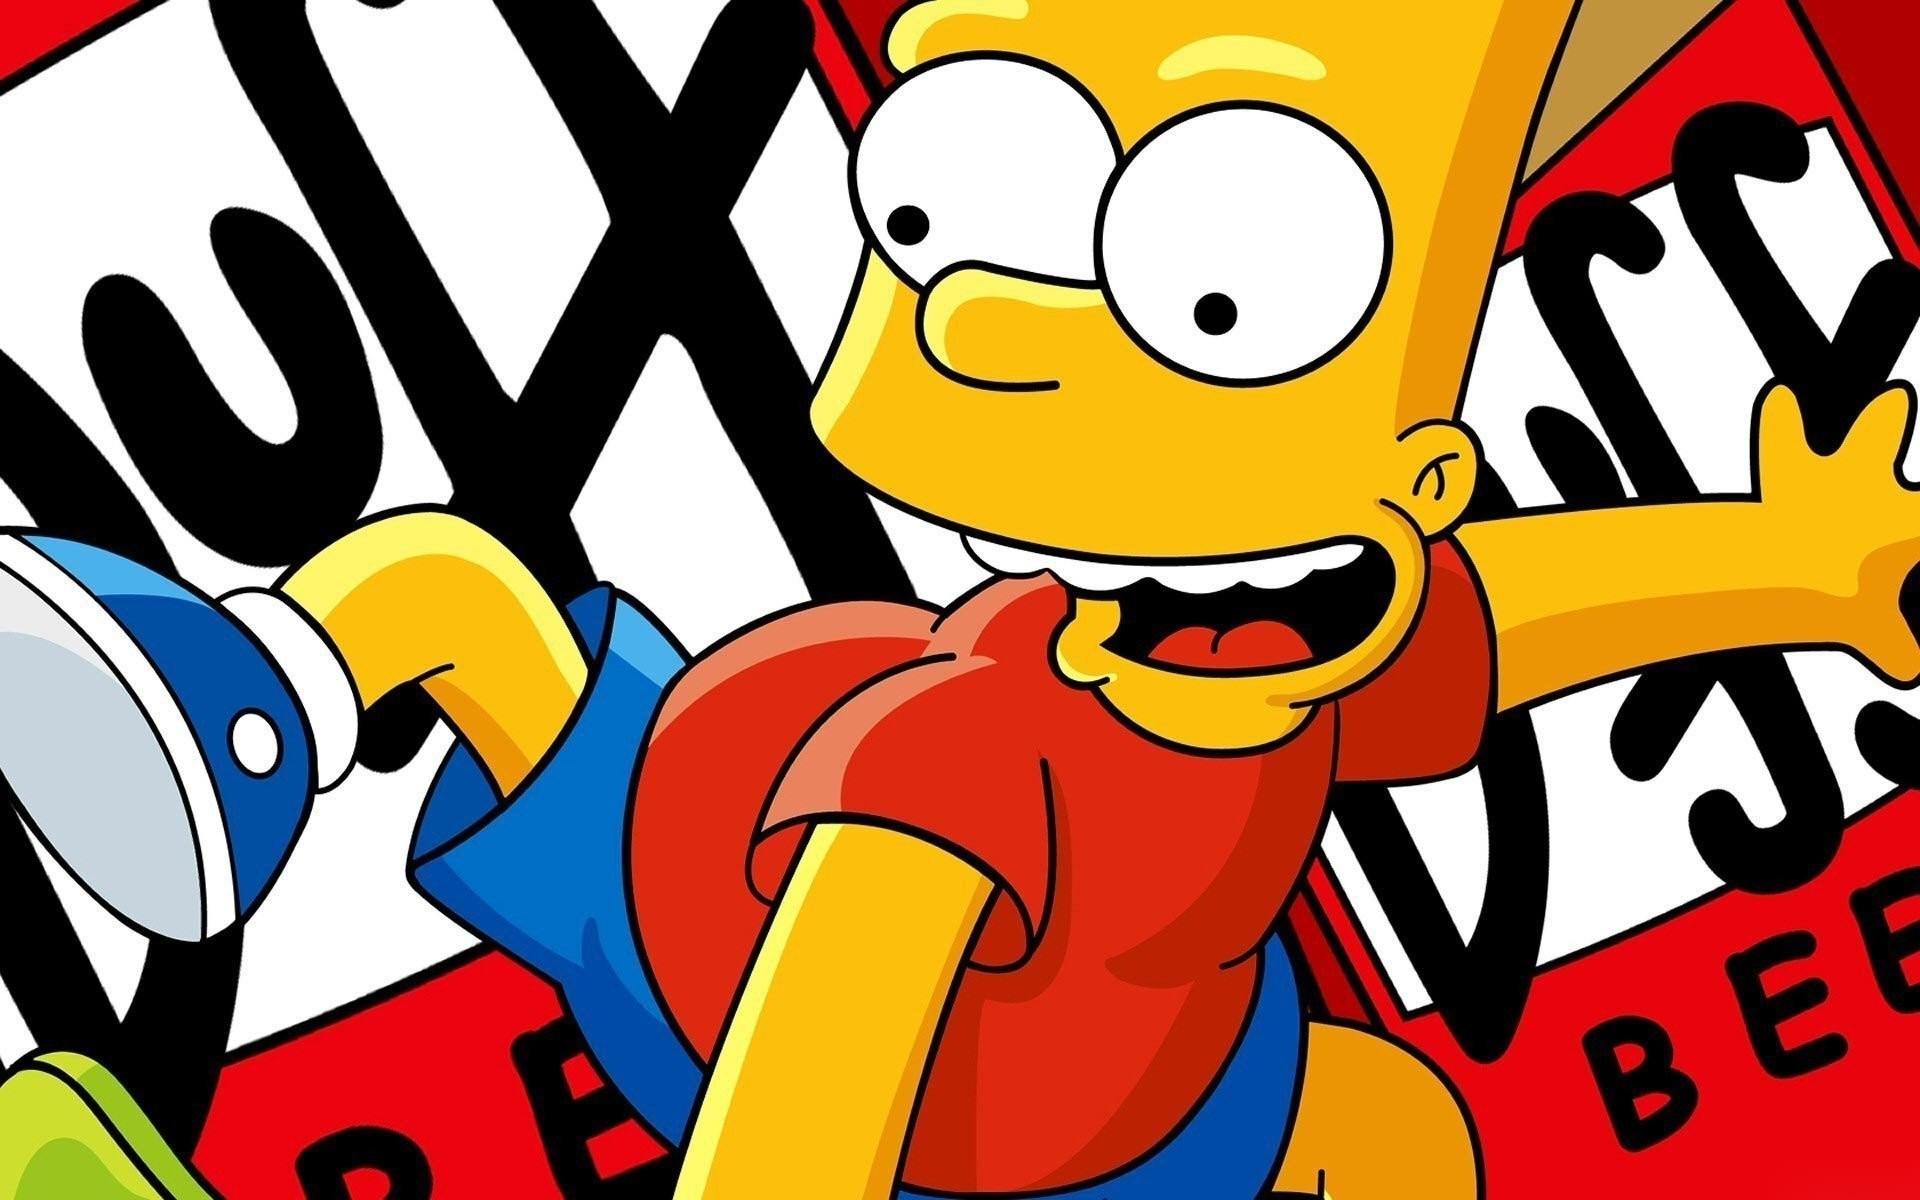 Bart Simpson Supreme Wallpaper iPhone